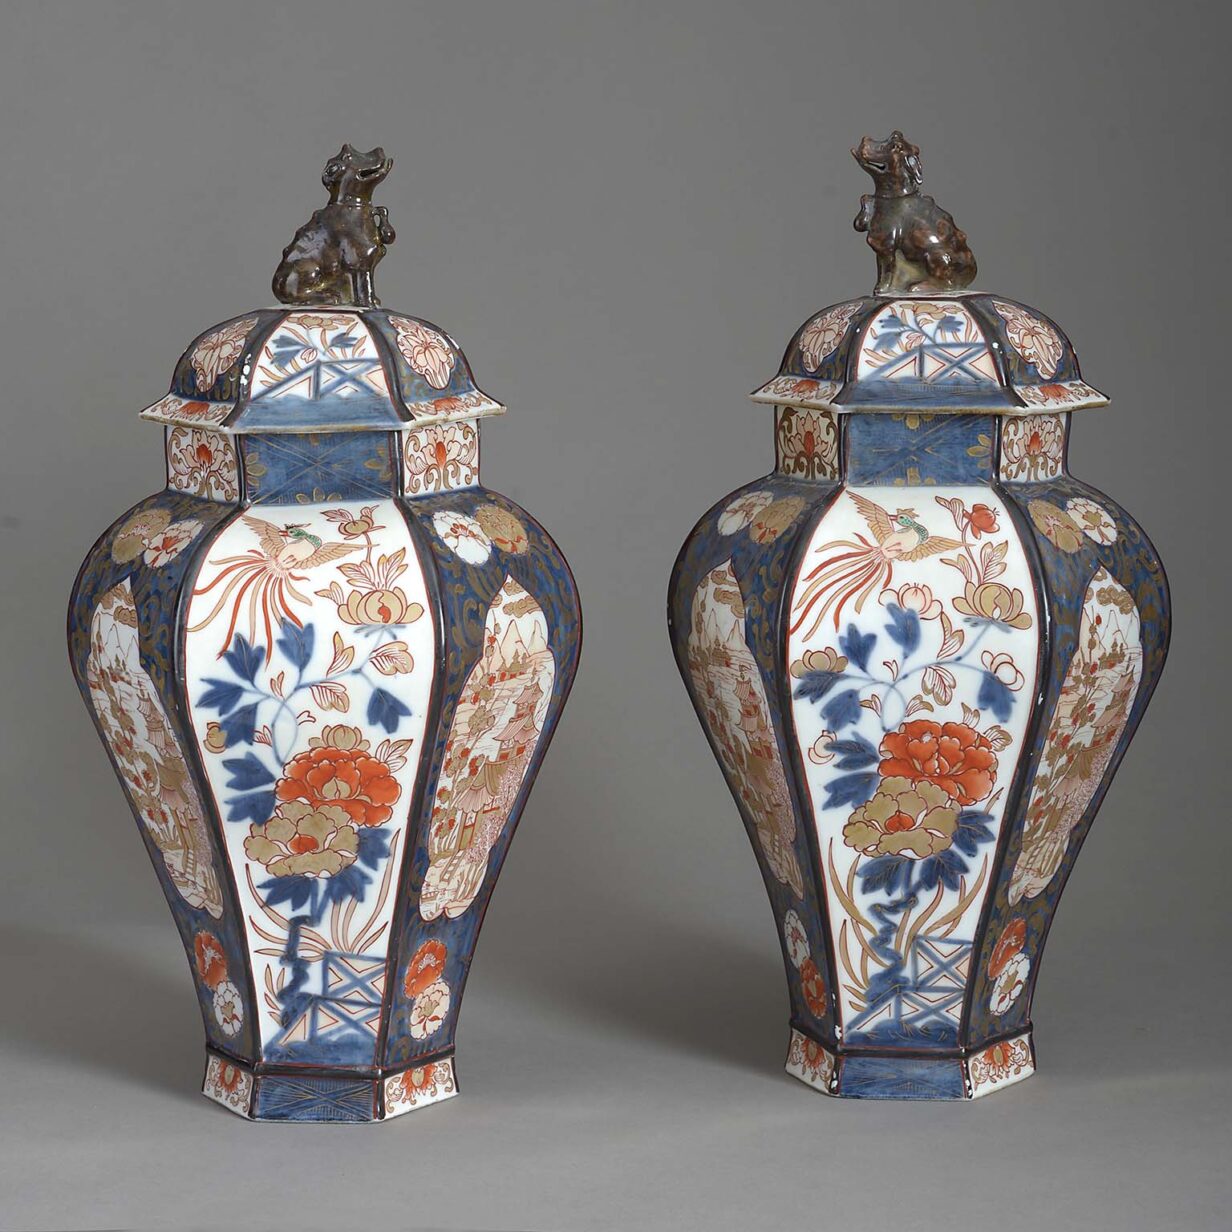 Pair of samson imari vases and covers